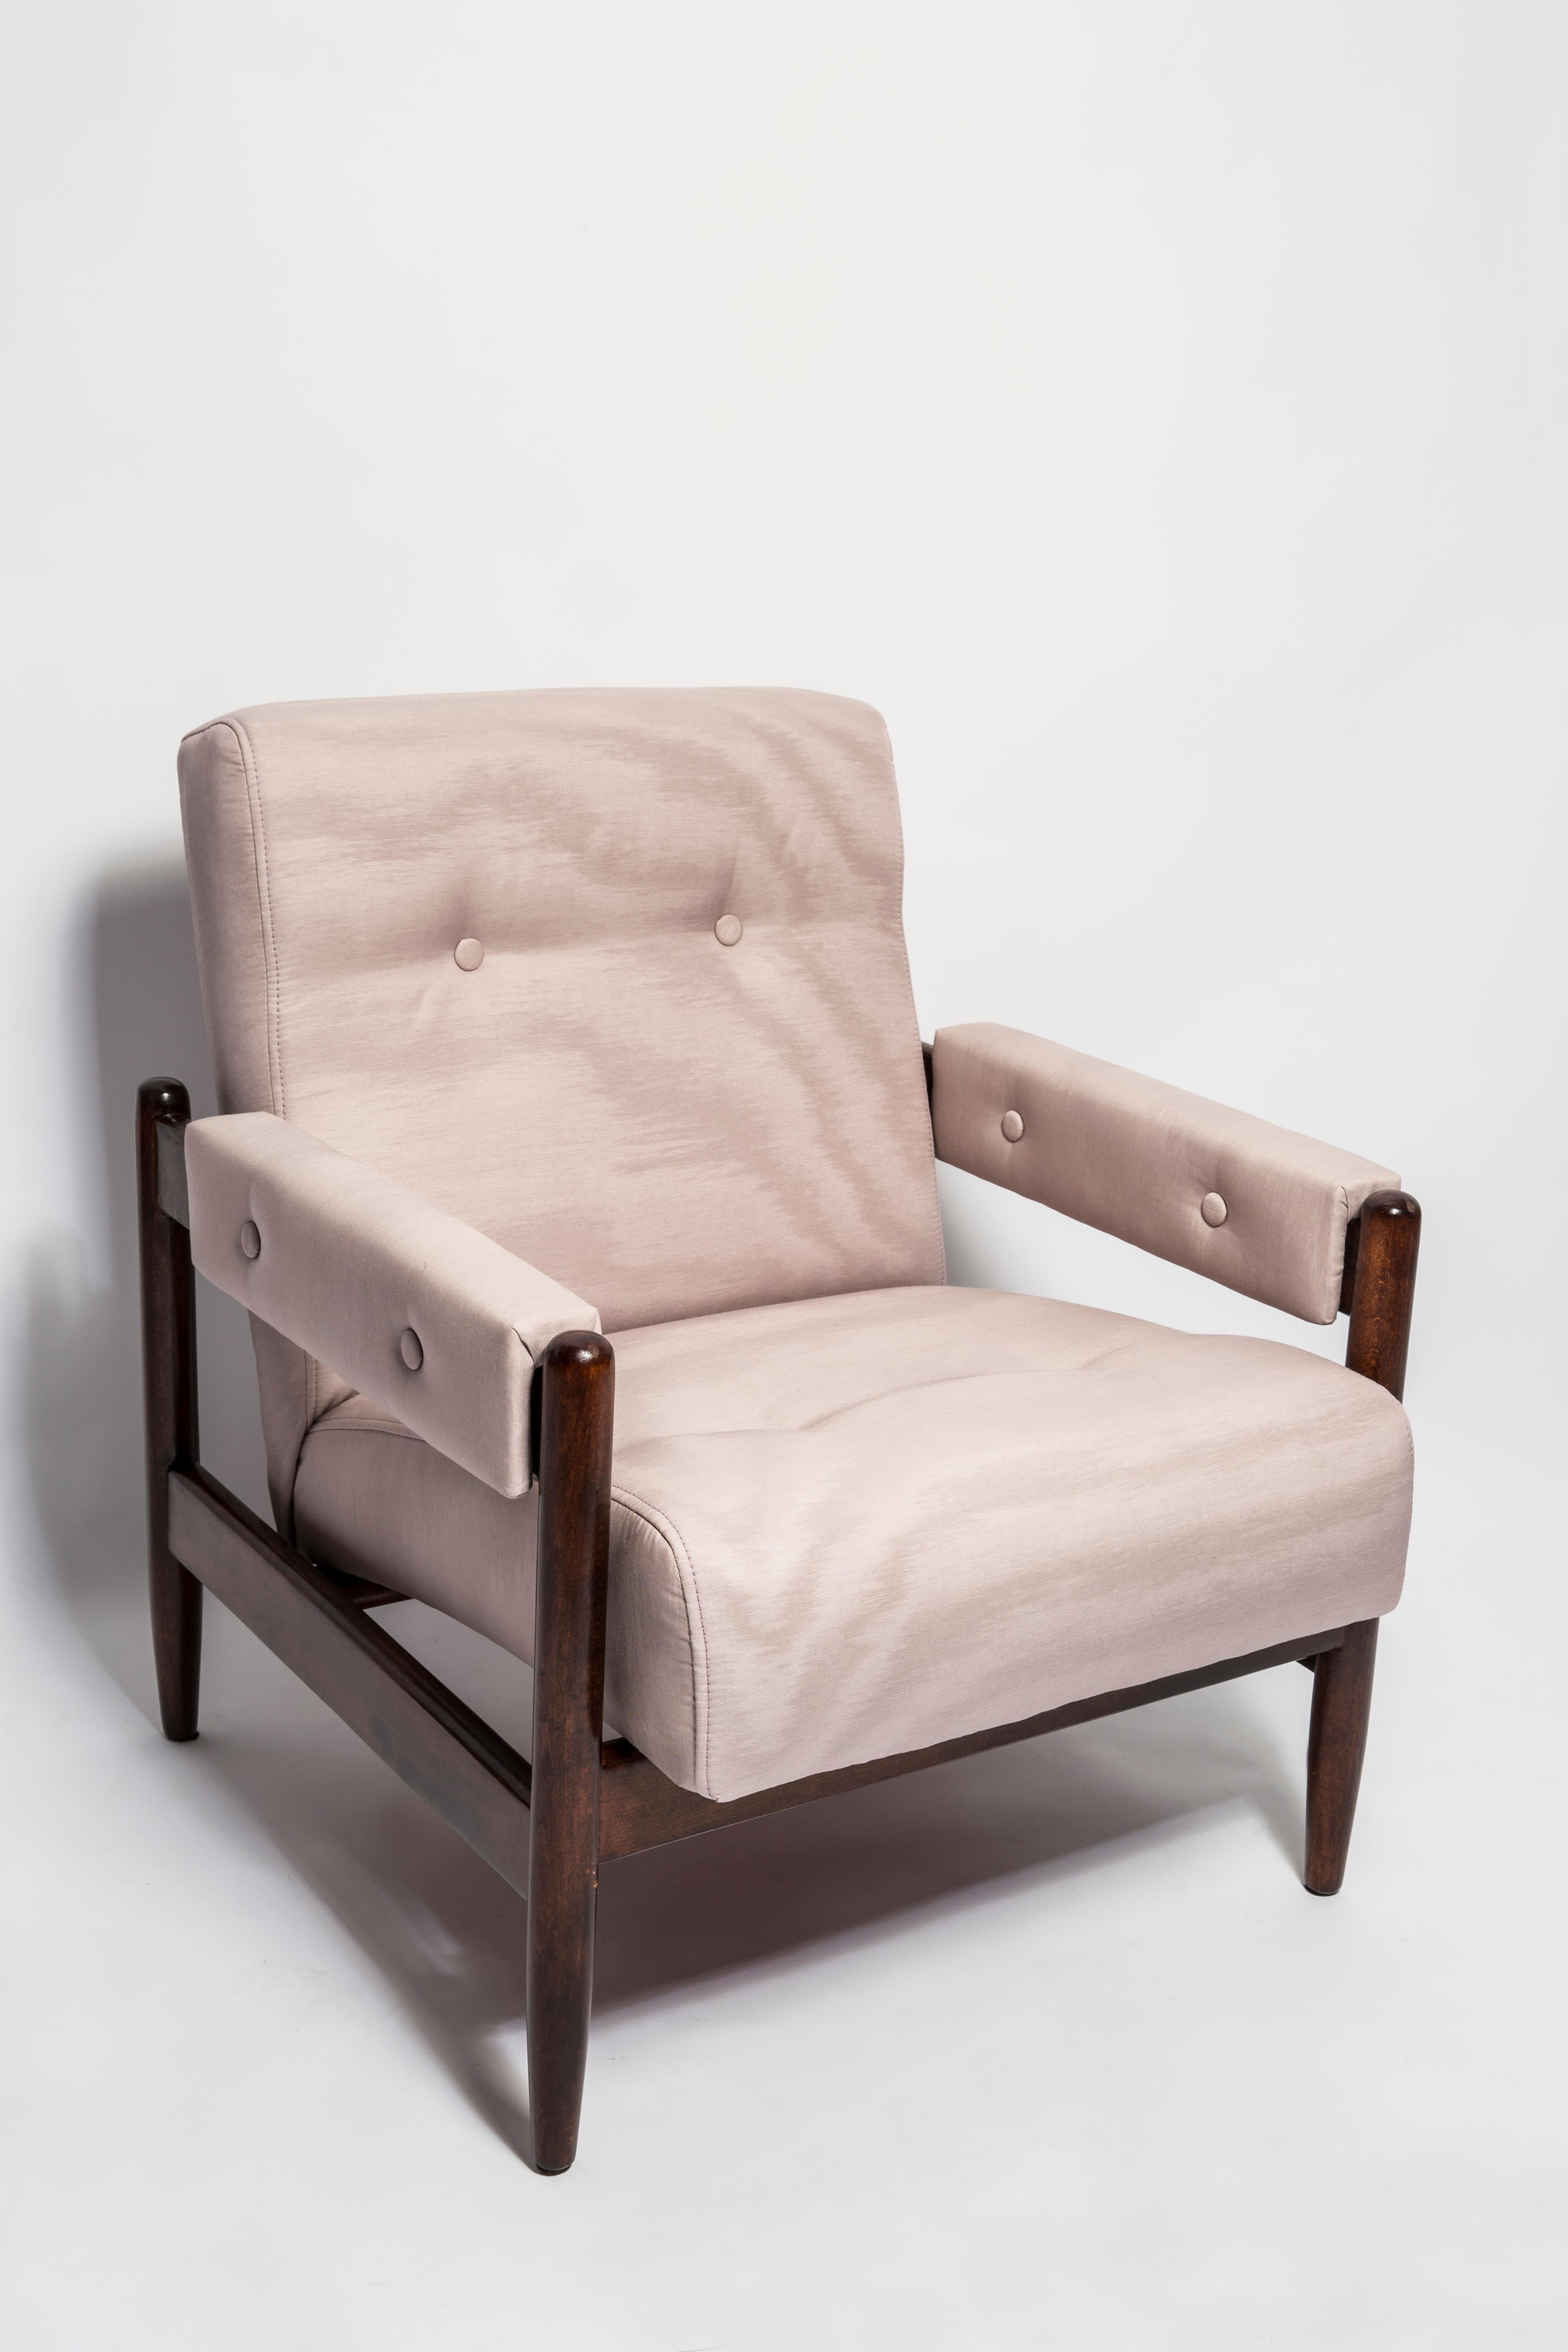 Paar Amoir Fou Moiré-Sessel aus der Mitte des Jahrhunderts in Lila-Rosa, Europa, 1960er Jahre (Moderne der Mitte des Jahrhunderts) im Angebot